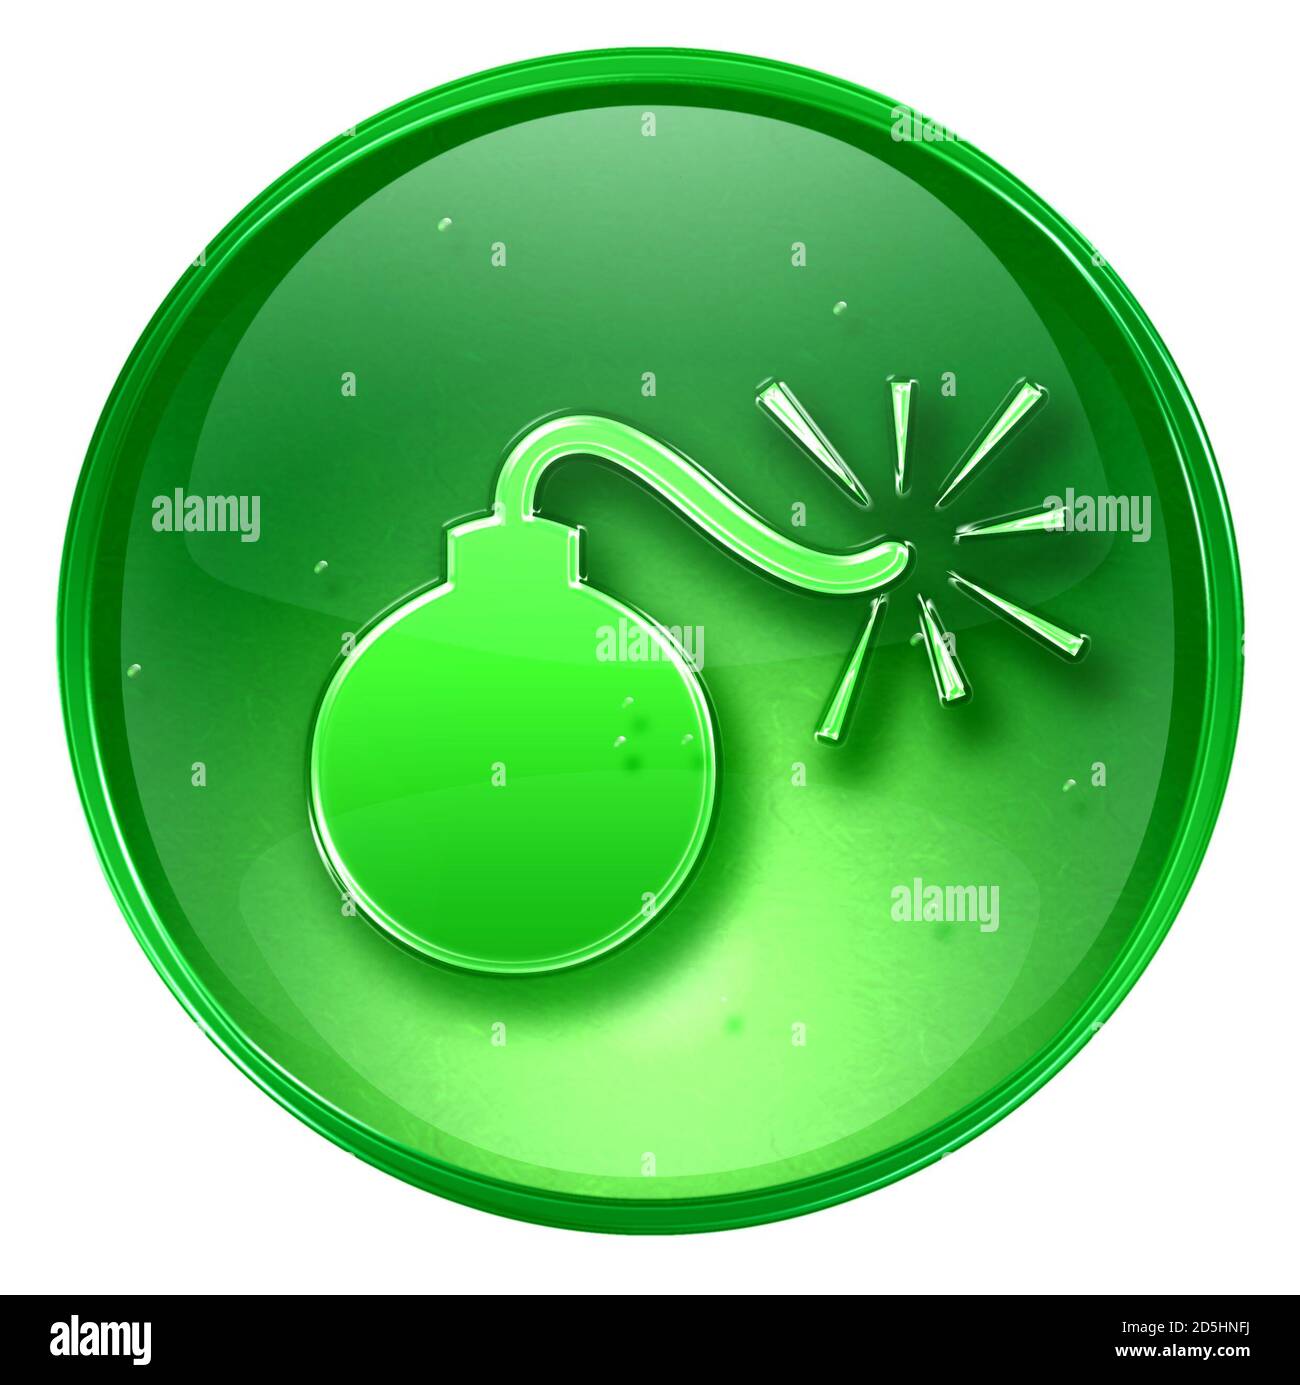 bomb icon green, isolated on white background. Stock Photo